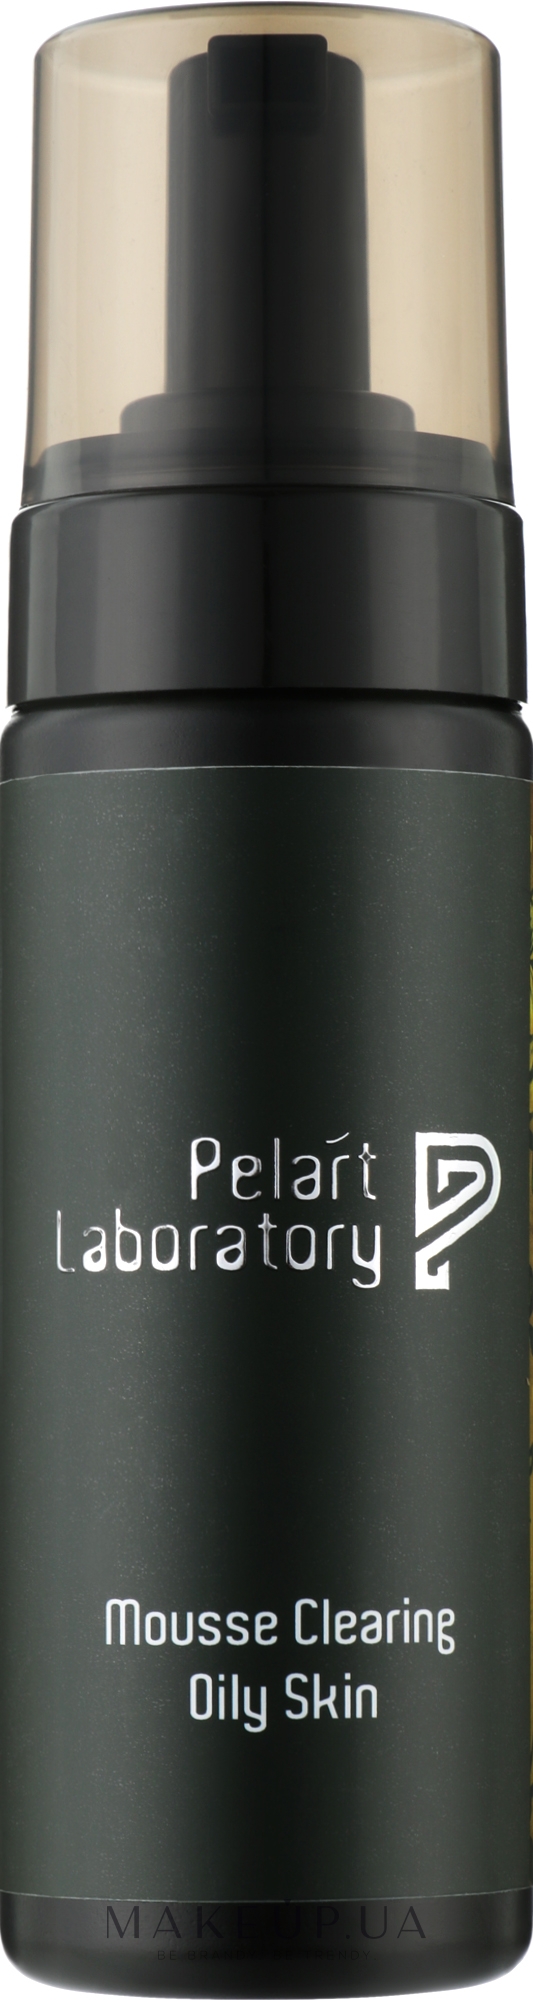 Очищающий мусс для жирной кожи лица - Pelart Laboratory Mousse Clearing Oily Skin  — фото 180ml